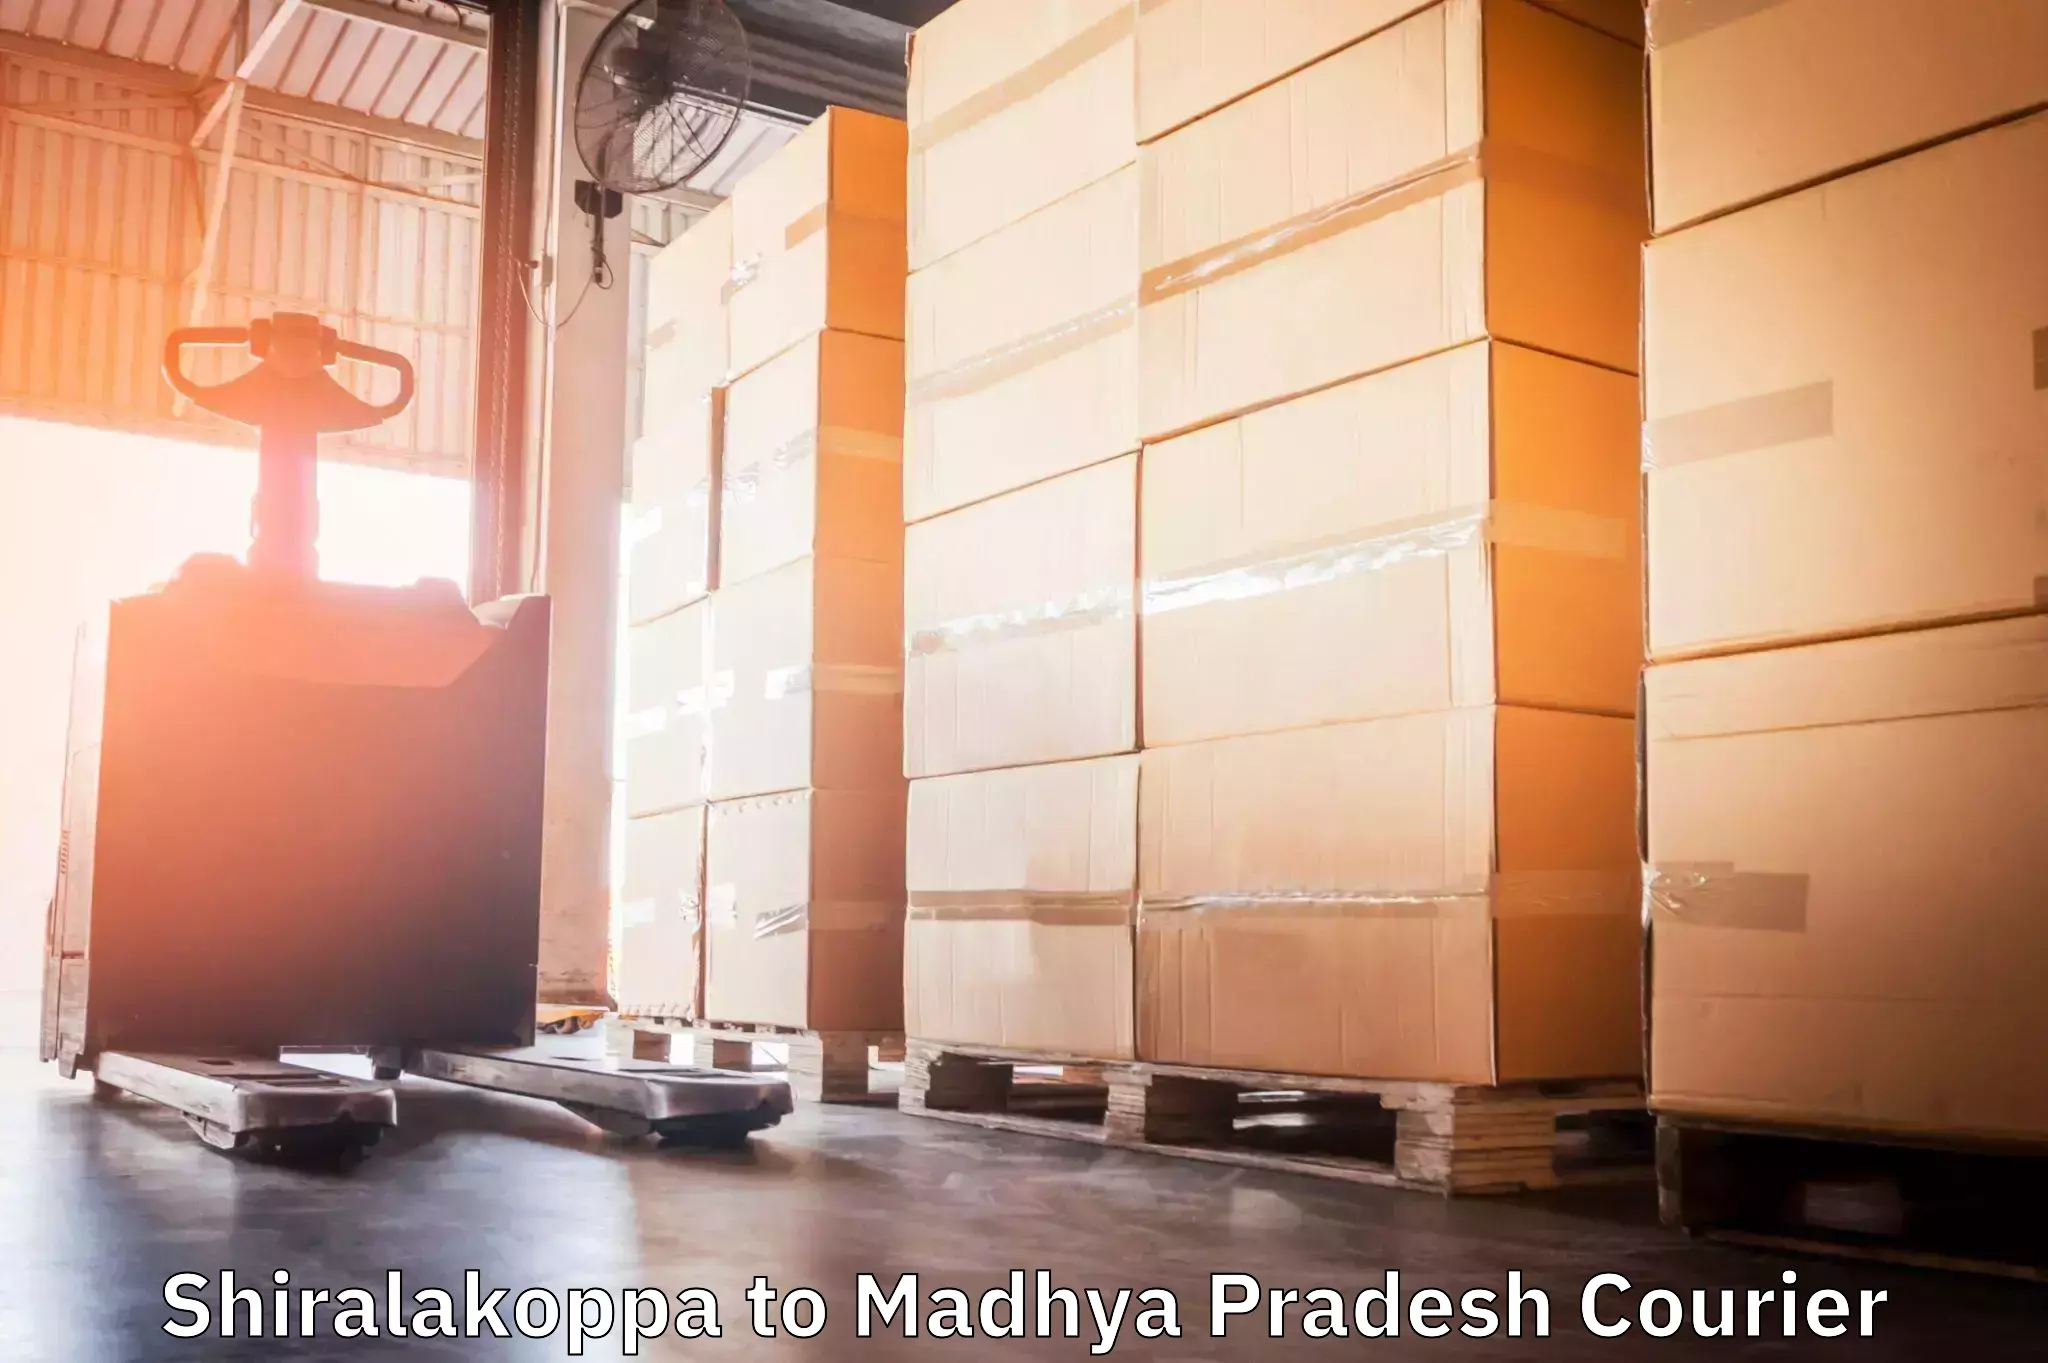 Express delivery capabilities Shiralakoppa to Madhya Pradesh